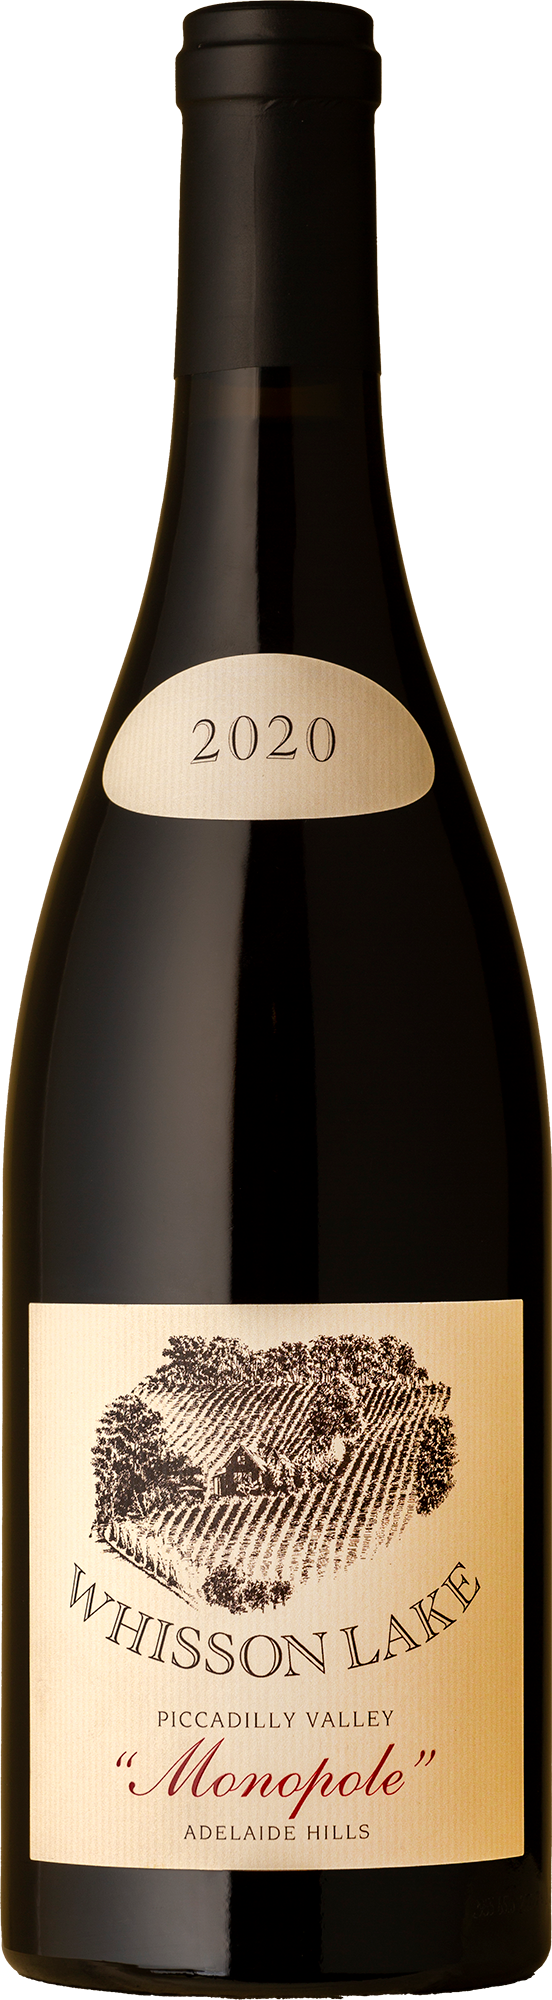 Whisson Lake - Monopole Pinot Noir 2020 Red Wine